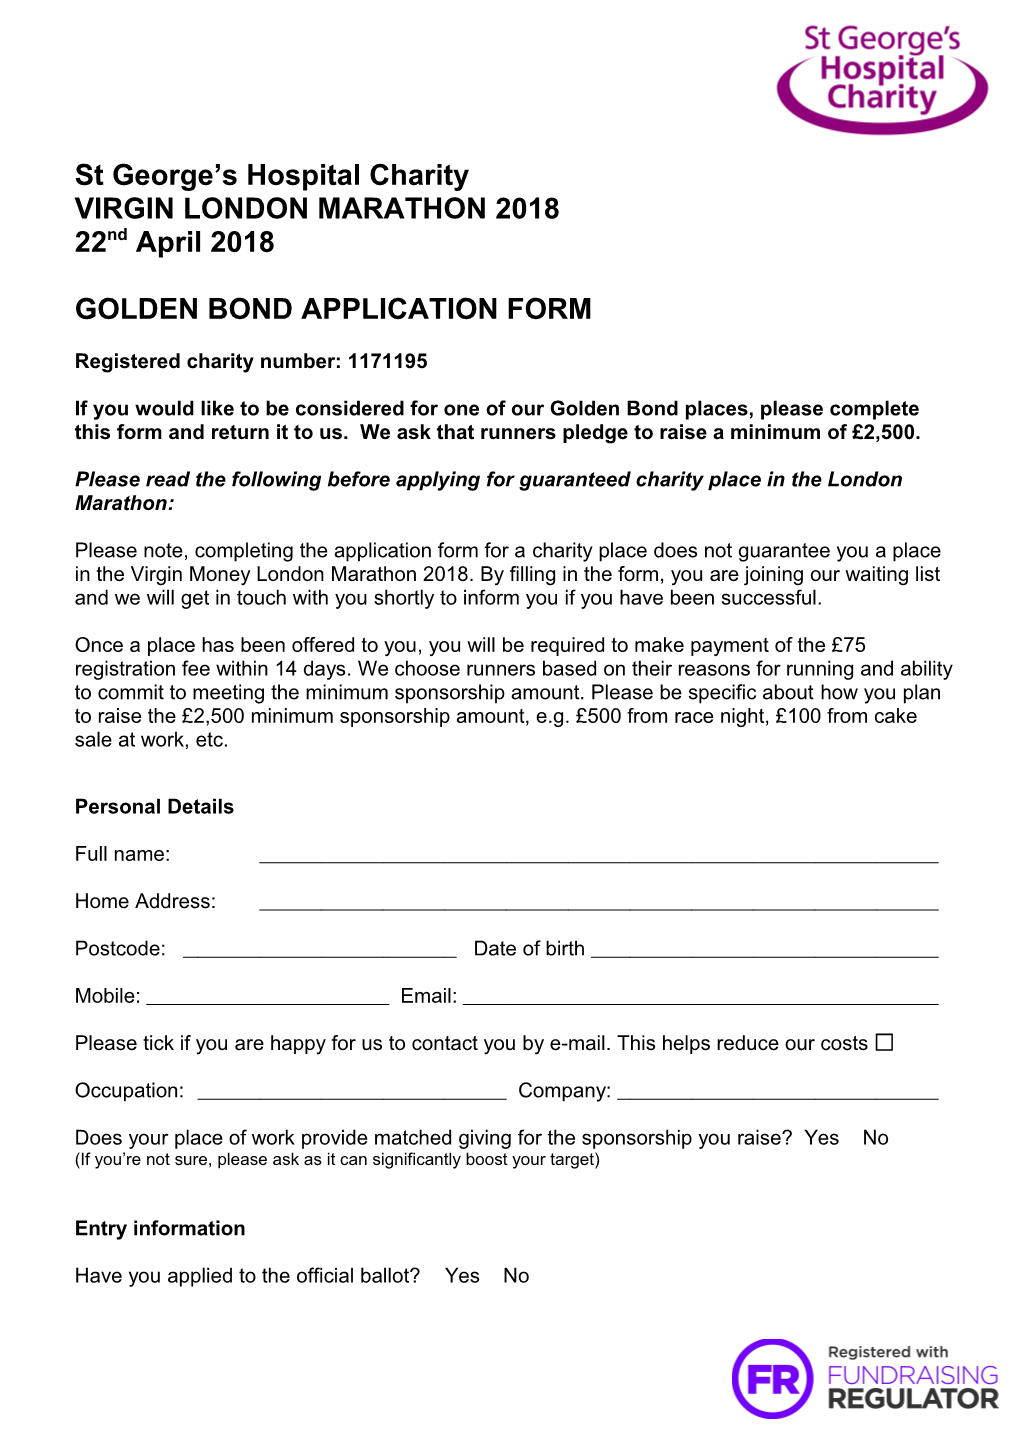 Golden Bond Application Form